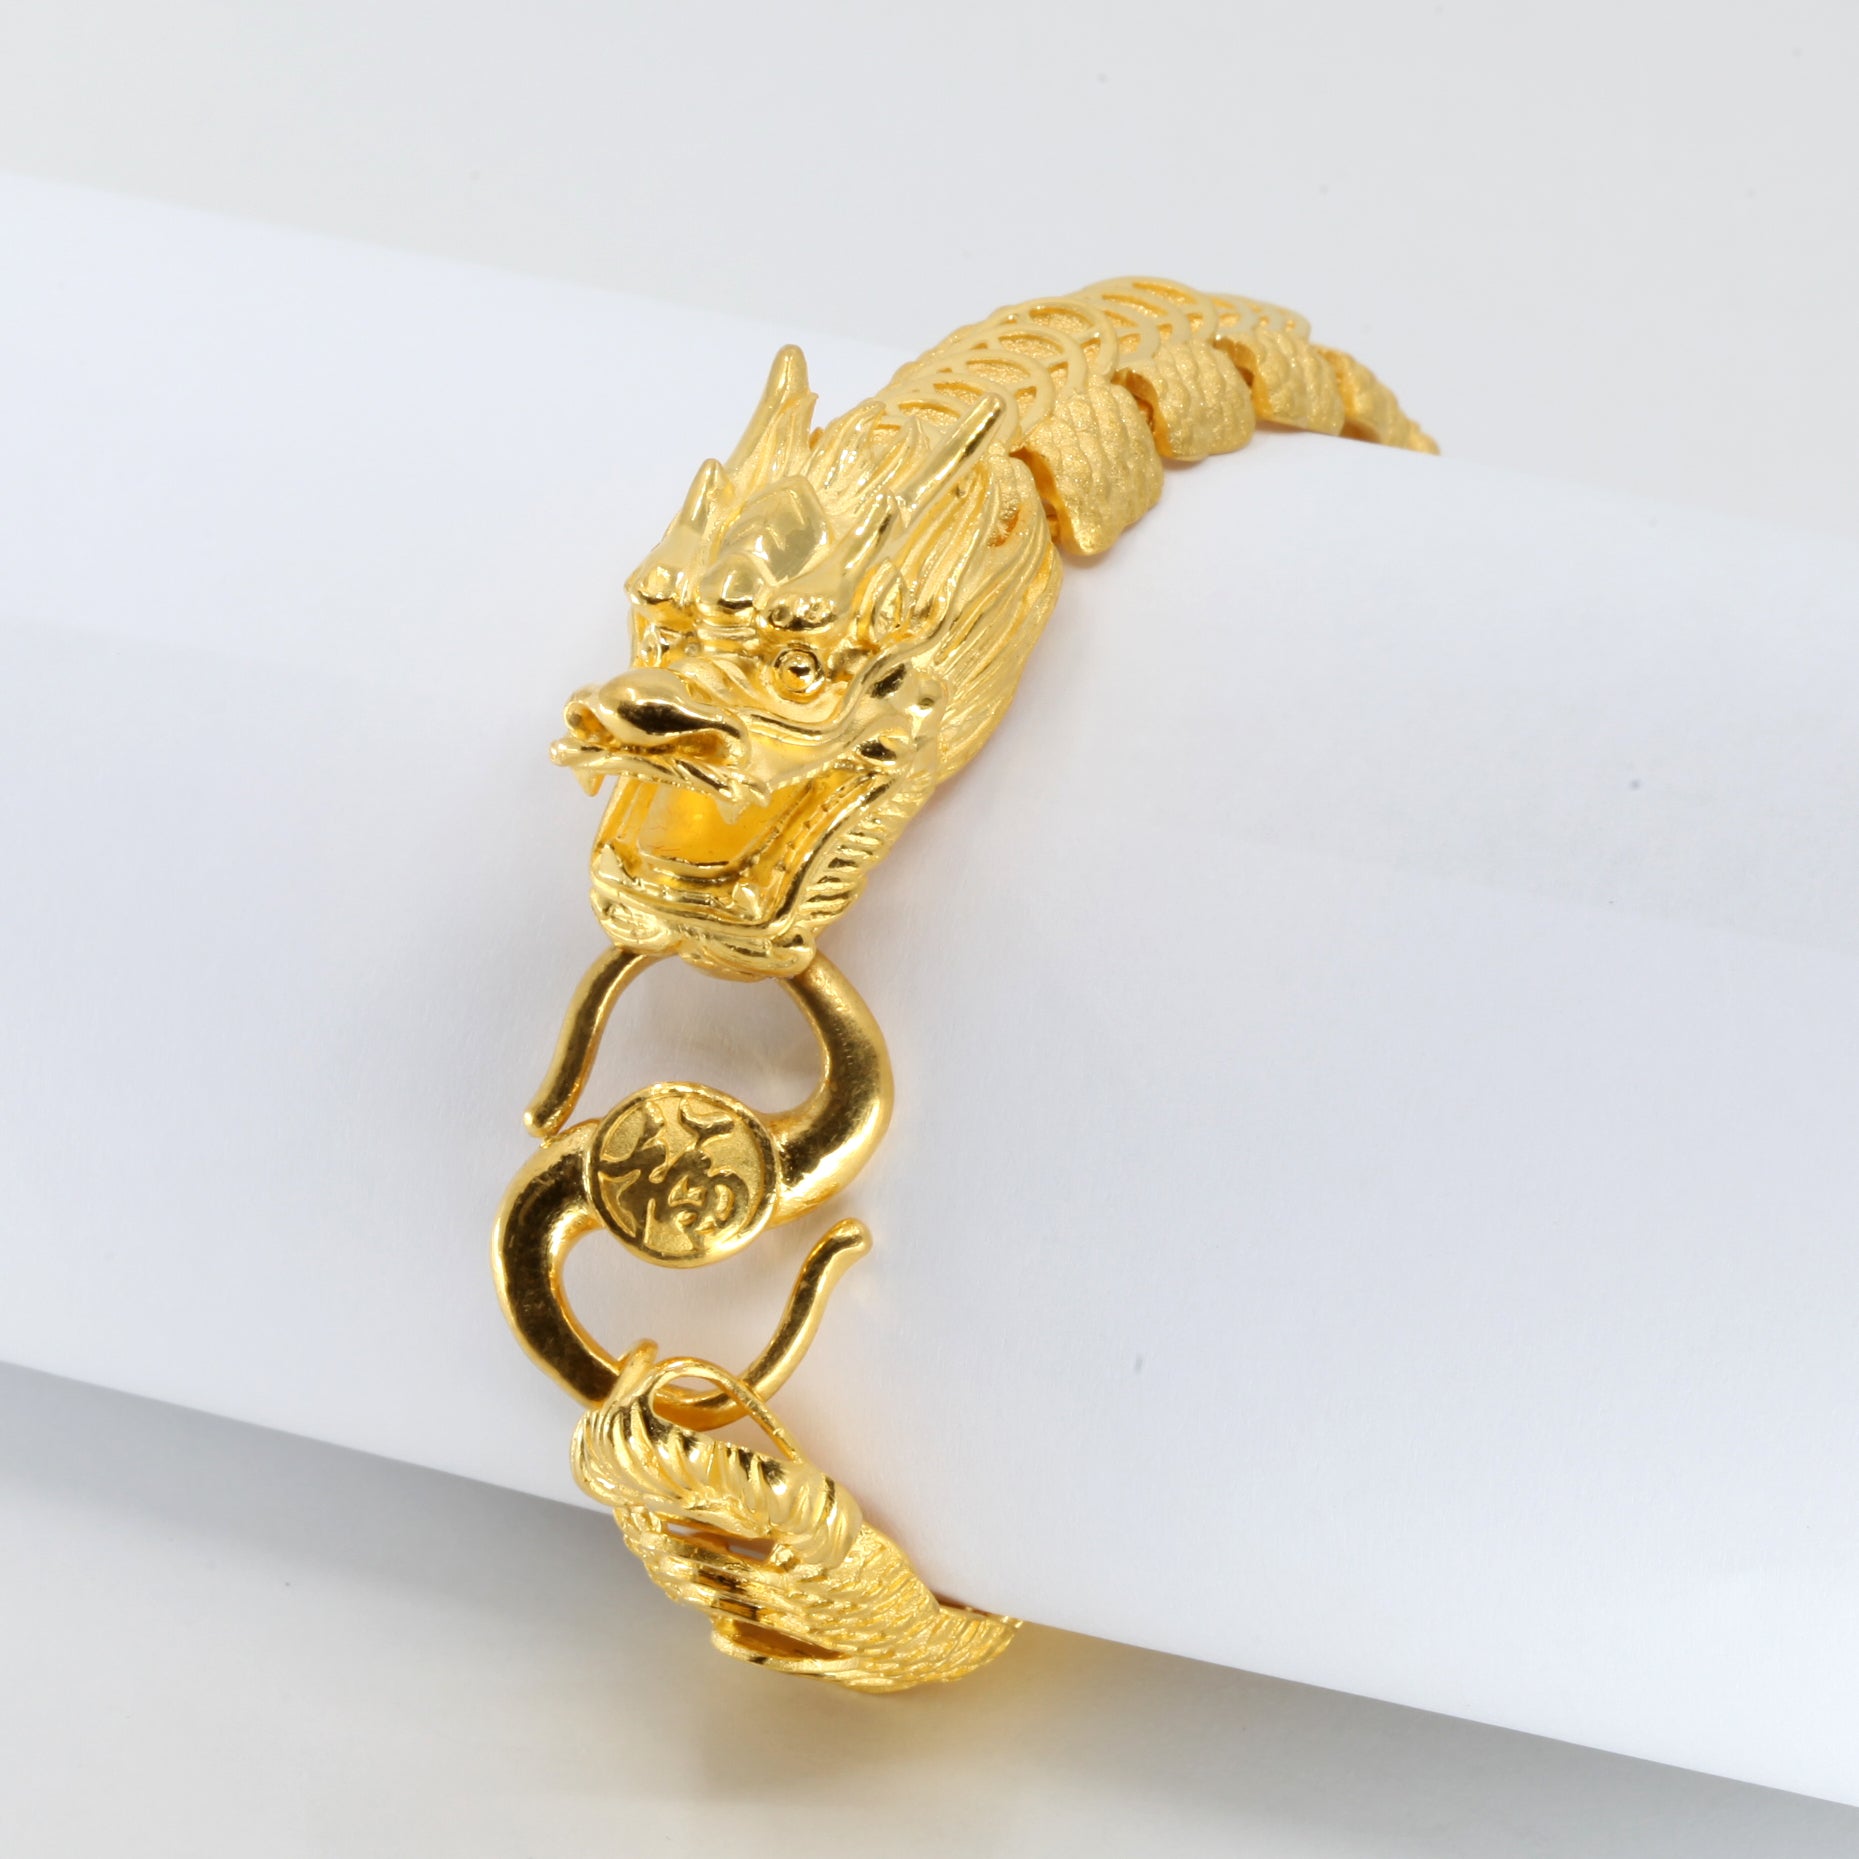 Thailand gold 24k Bracelet for my mom🤗 : r/Gold